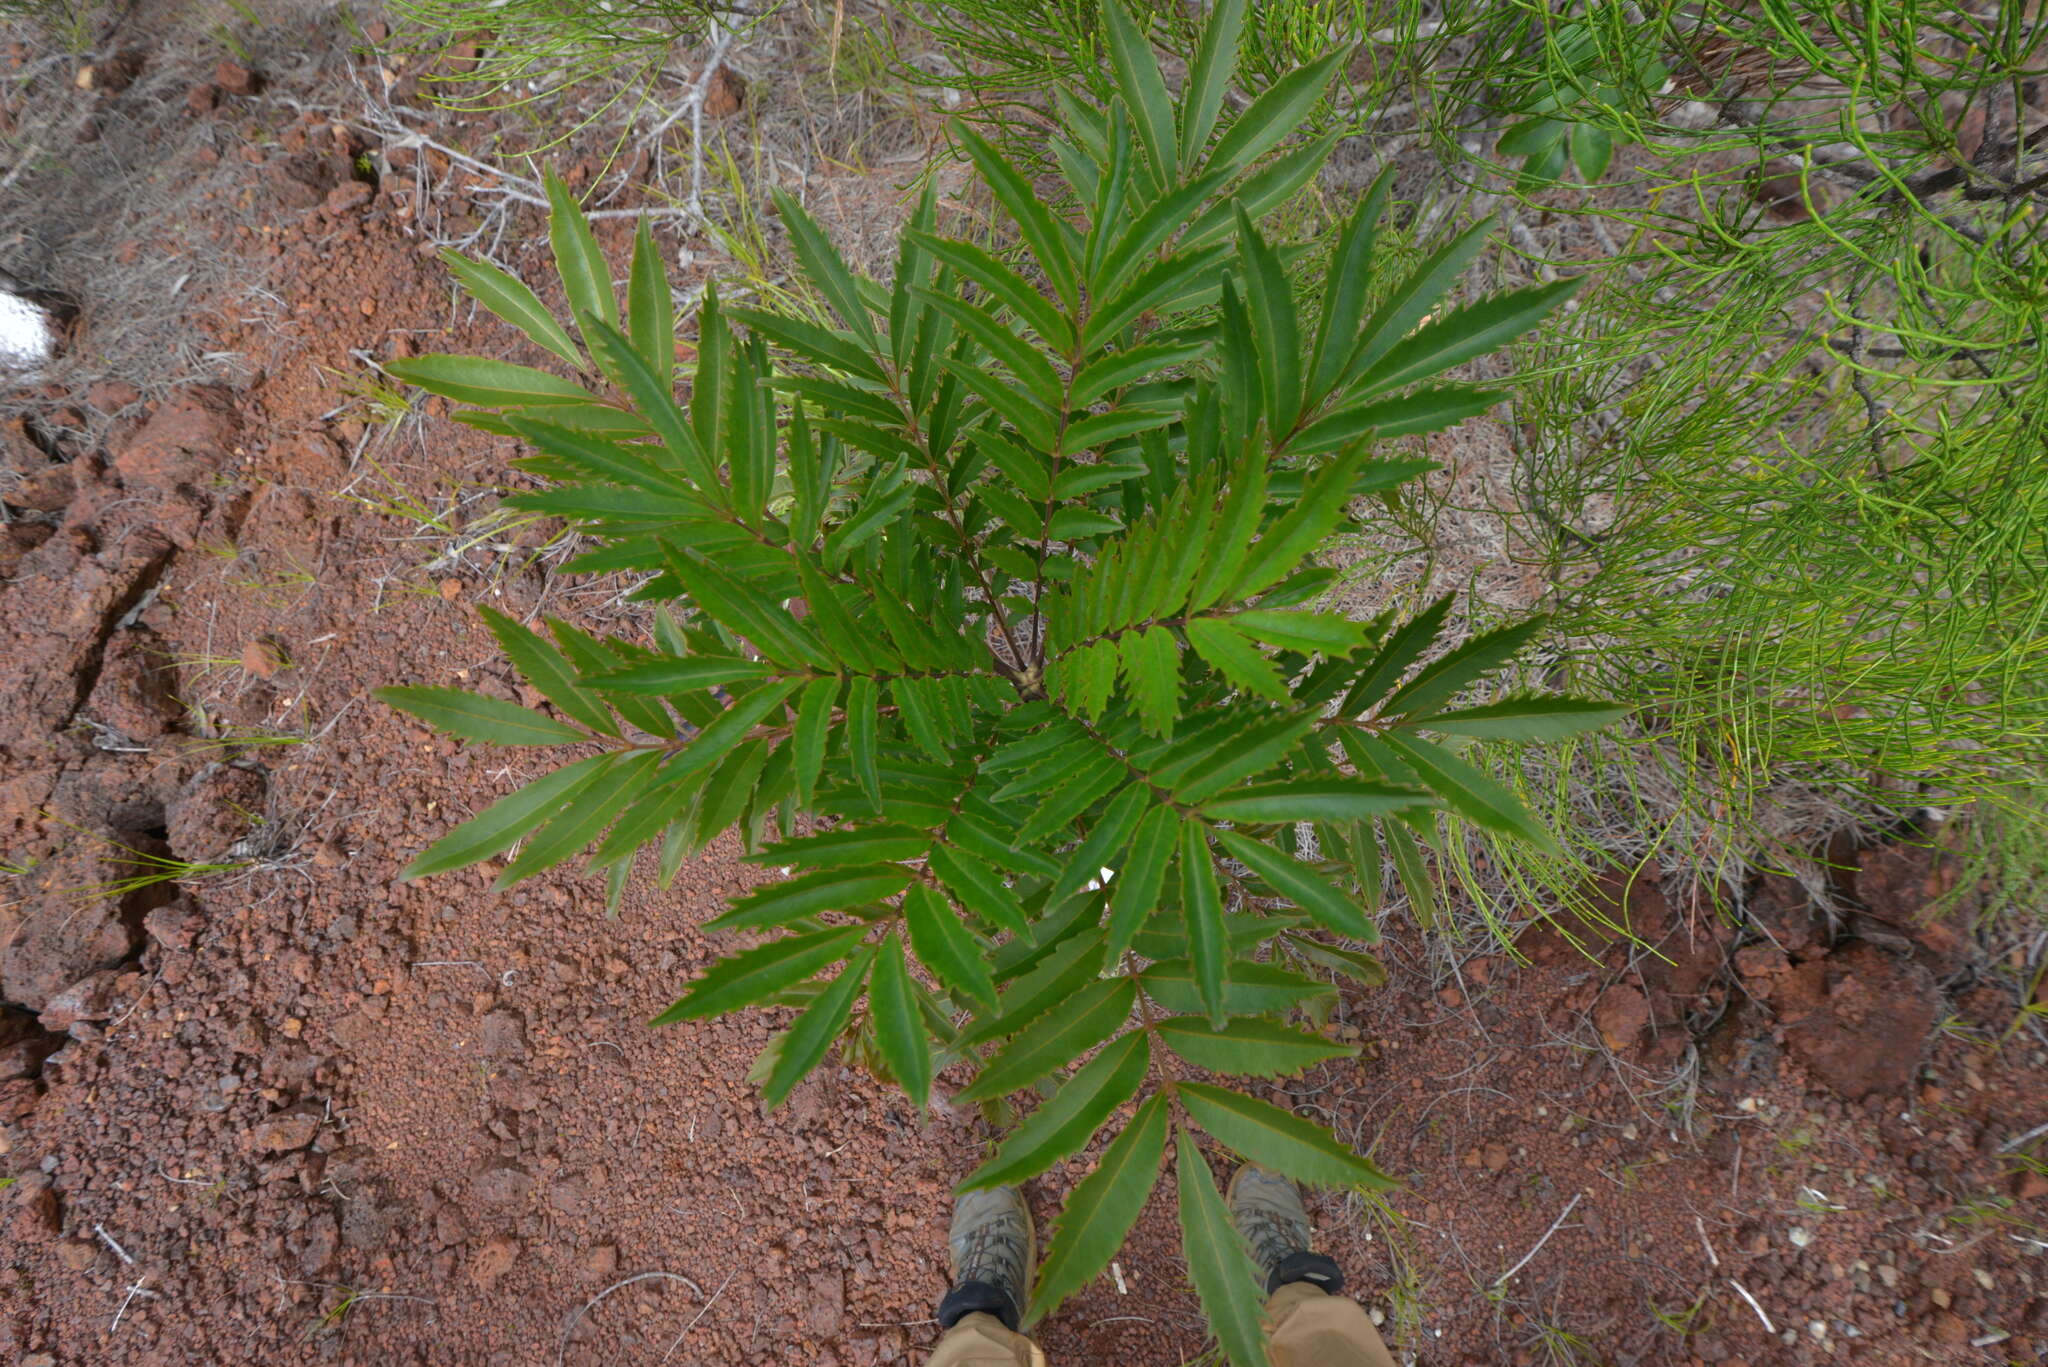 Image of Myodocarpus fraxinifolius Brongn. & Gris